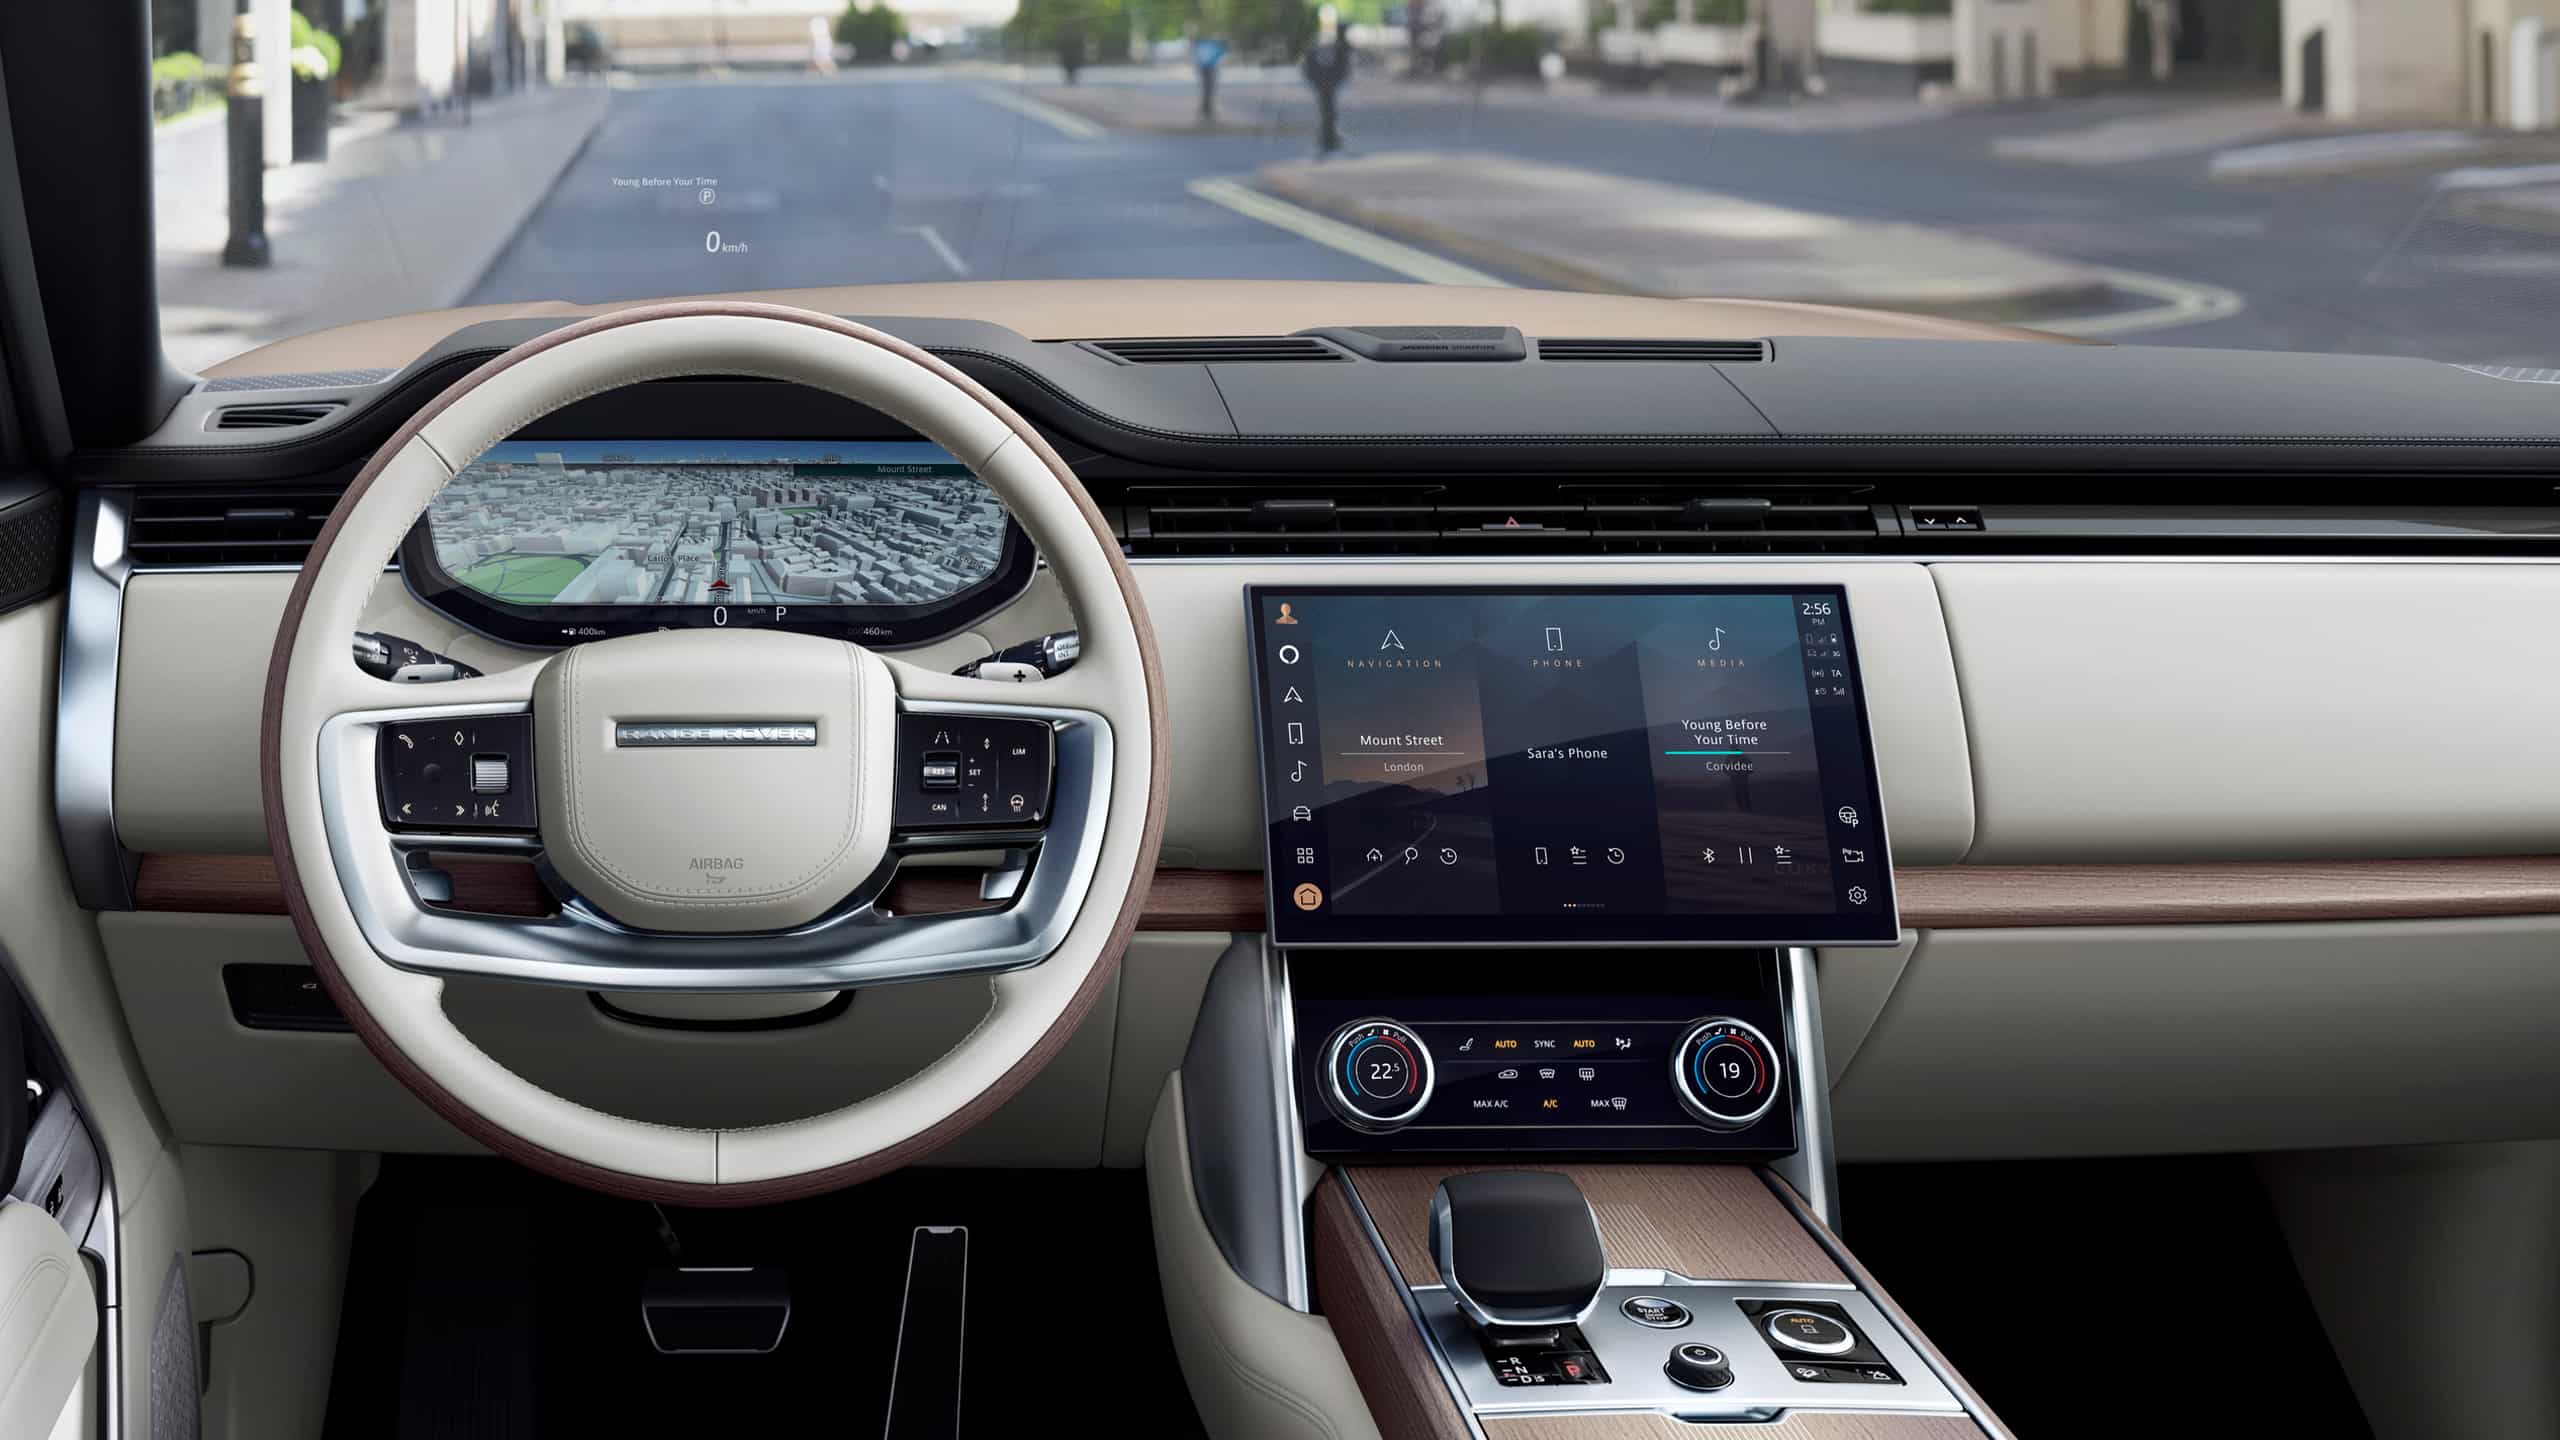 Range Rover Interactive Dashboard